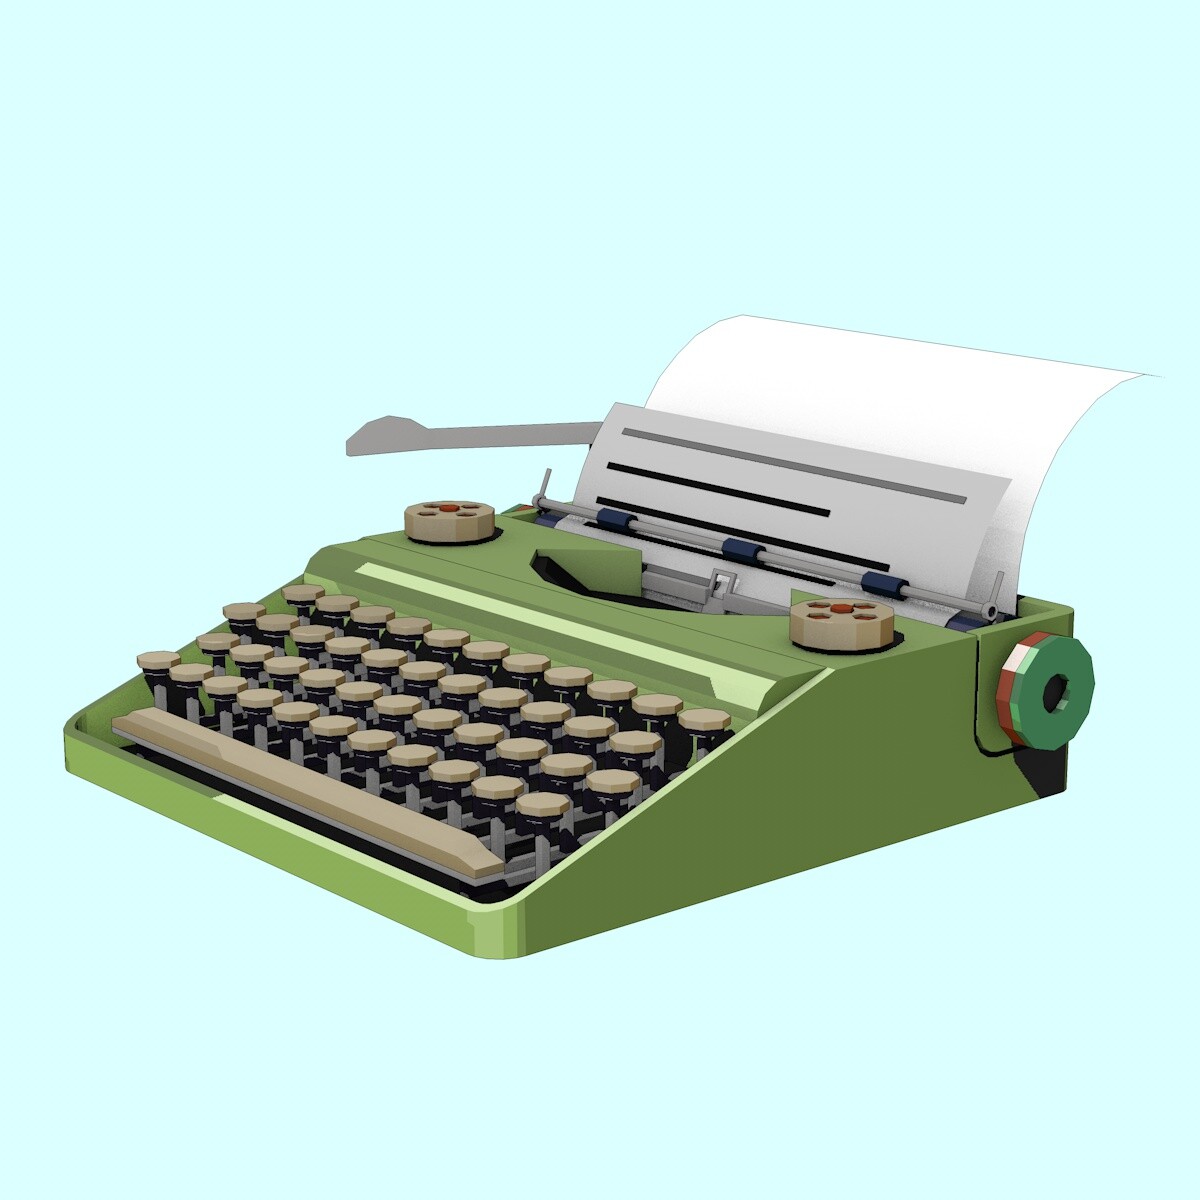 ArtStation - Low Poly Cartoon Style Typewriter